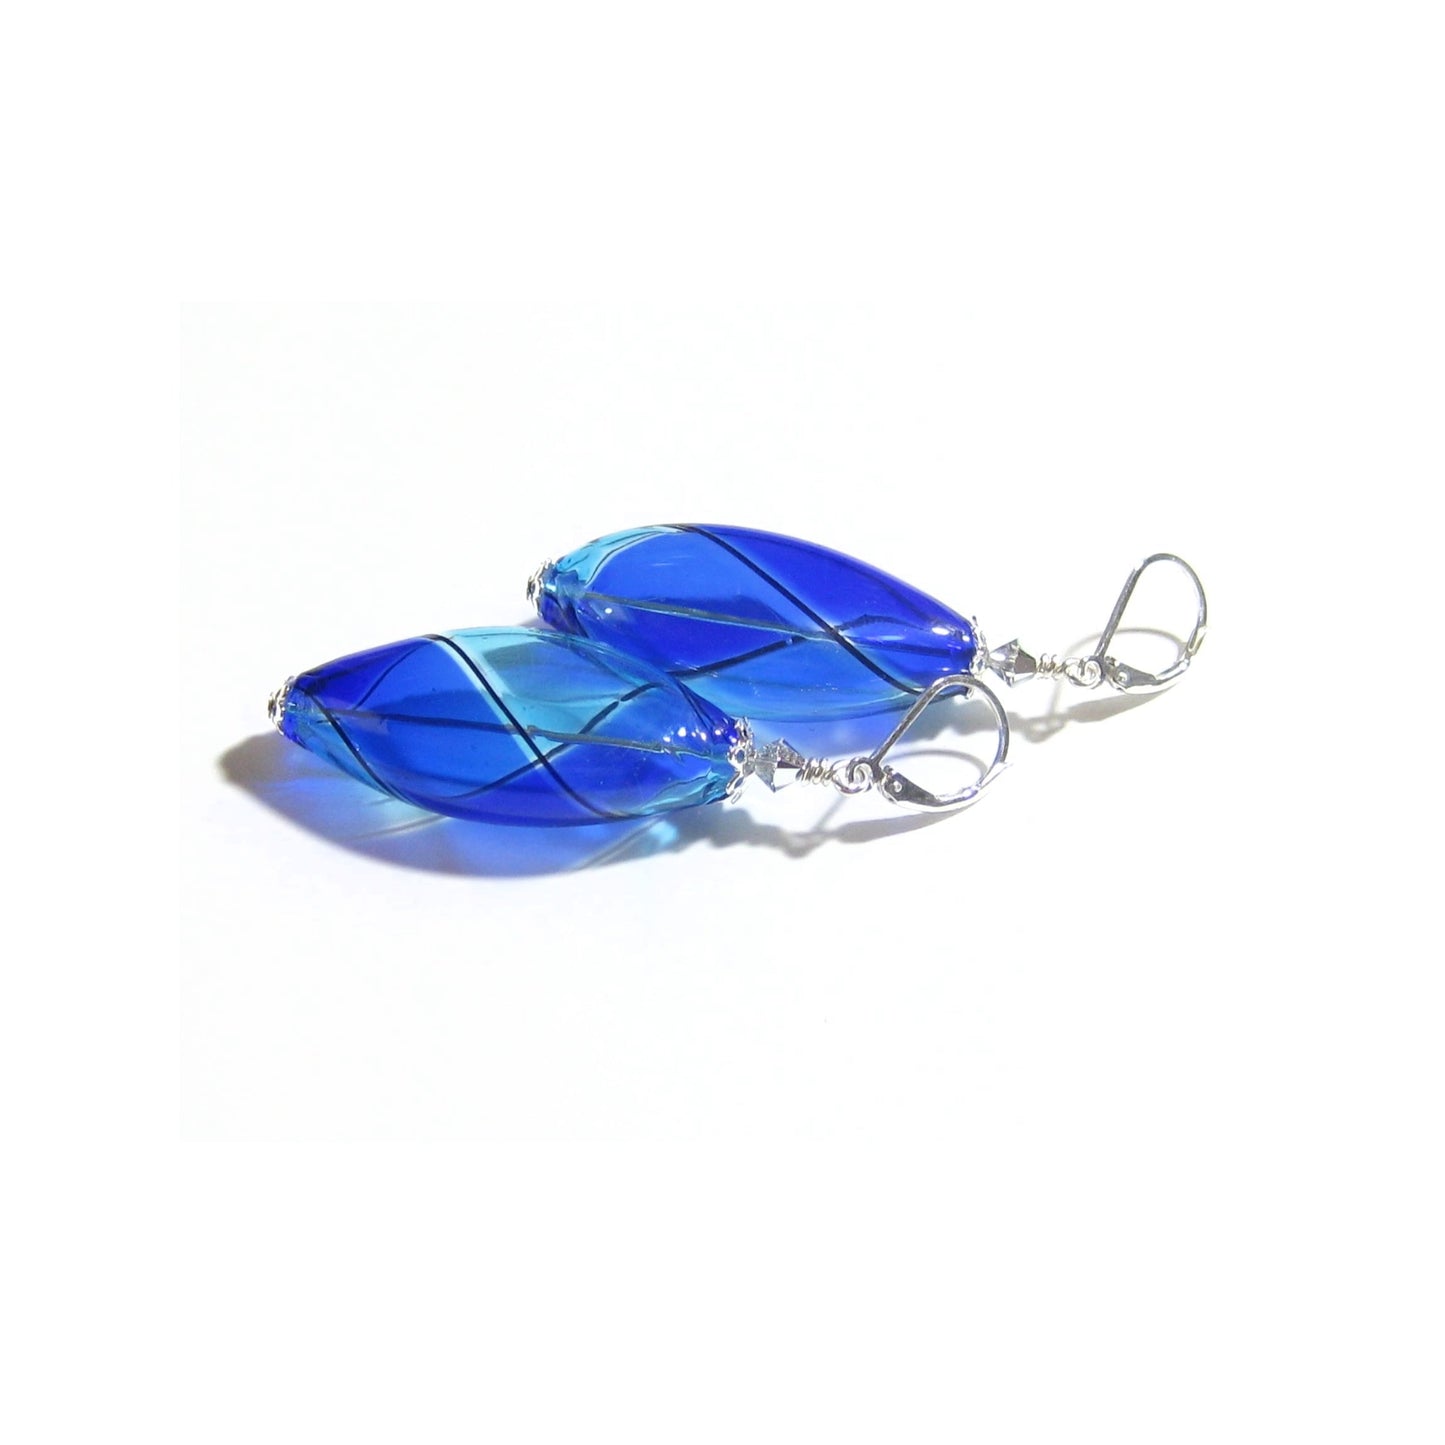 Murano Blown Glass Bicolor Cobalt Blue Aqua Long Argyle Earrings - JKC Murano